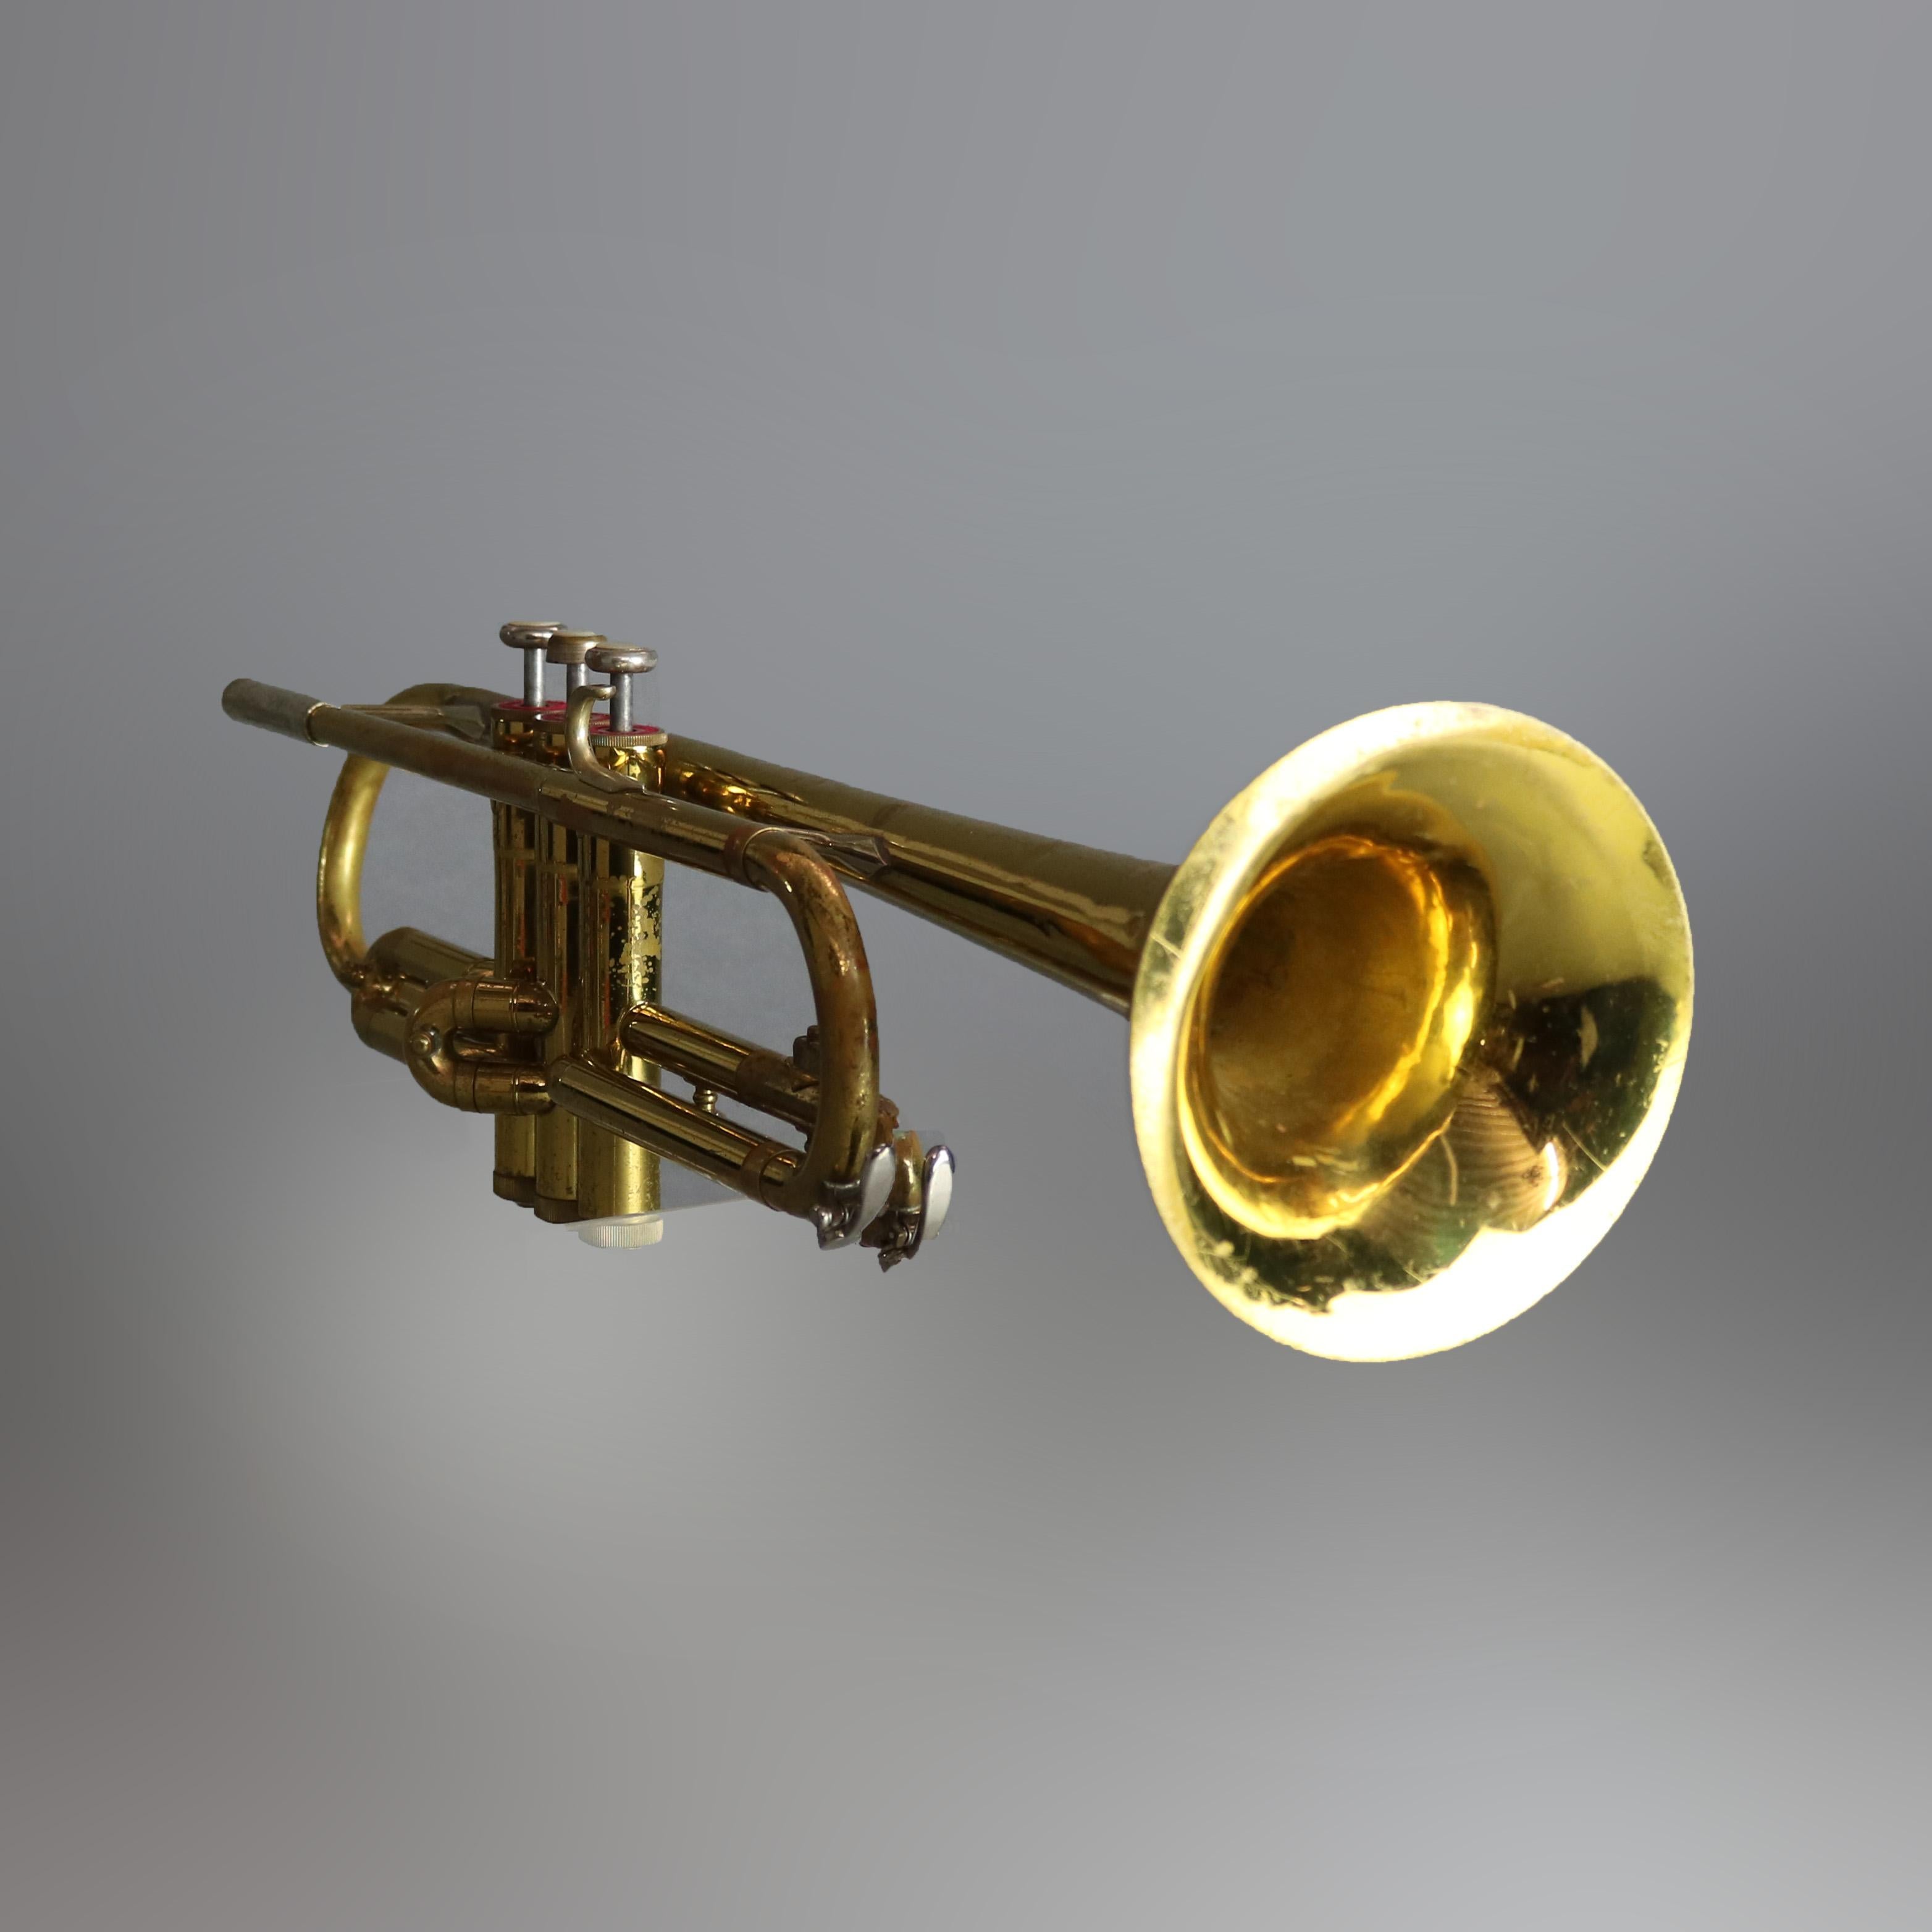 bundy trumpet value